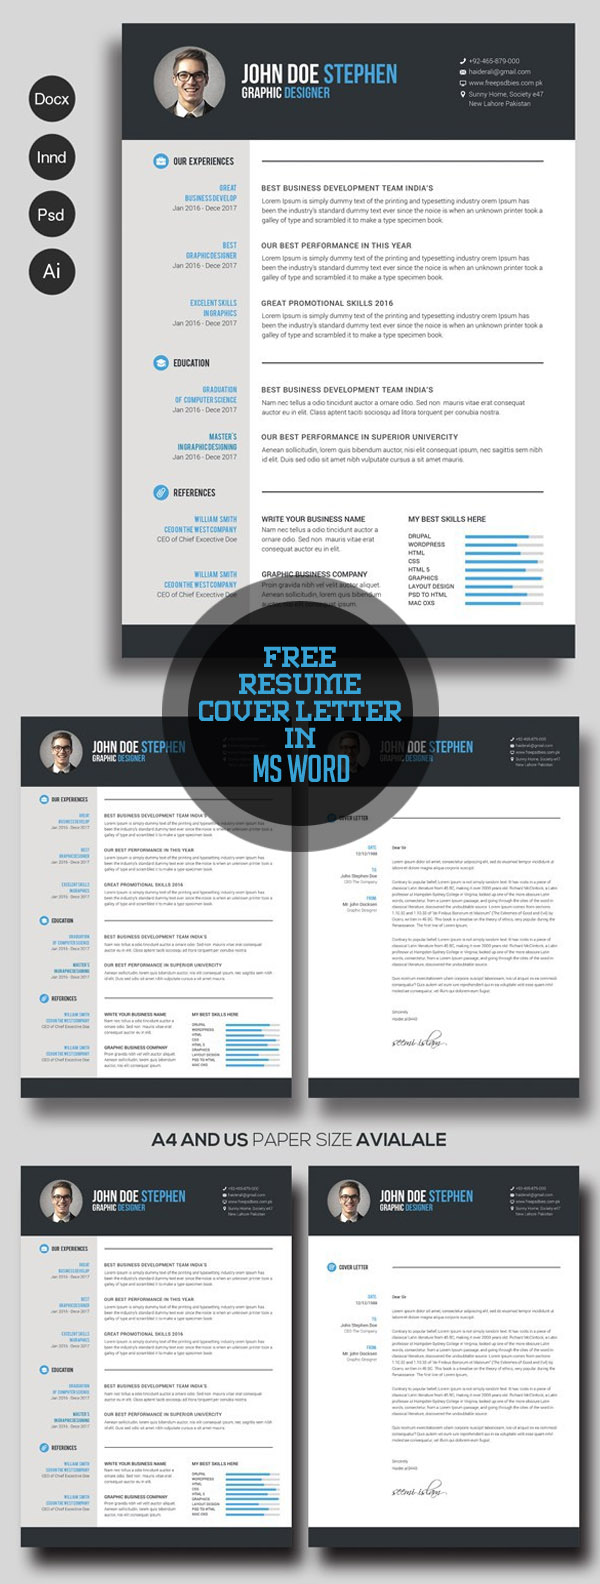 20 free cv resume templates 2017 freebies graphic design junction